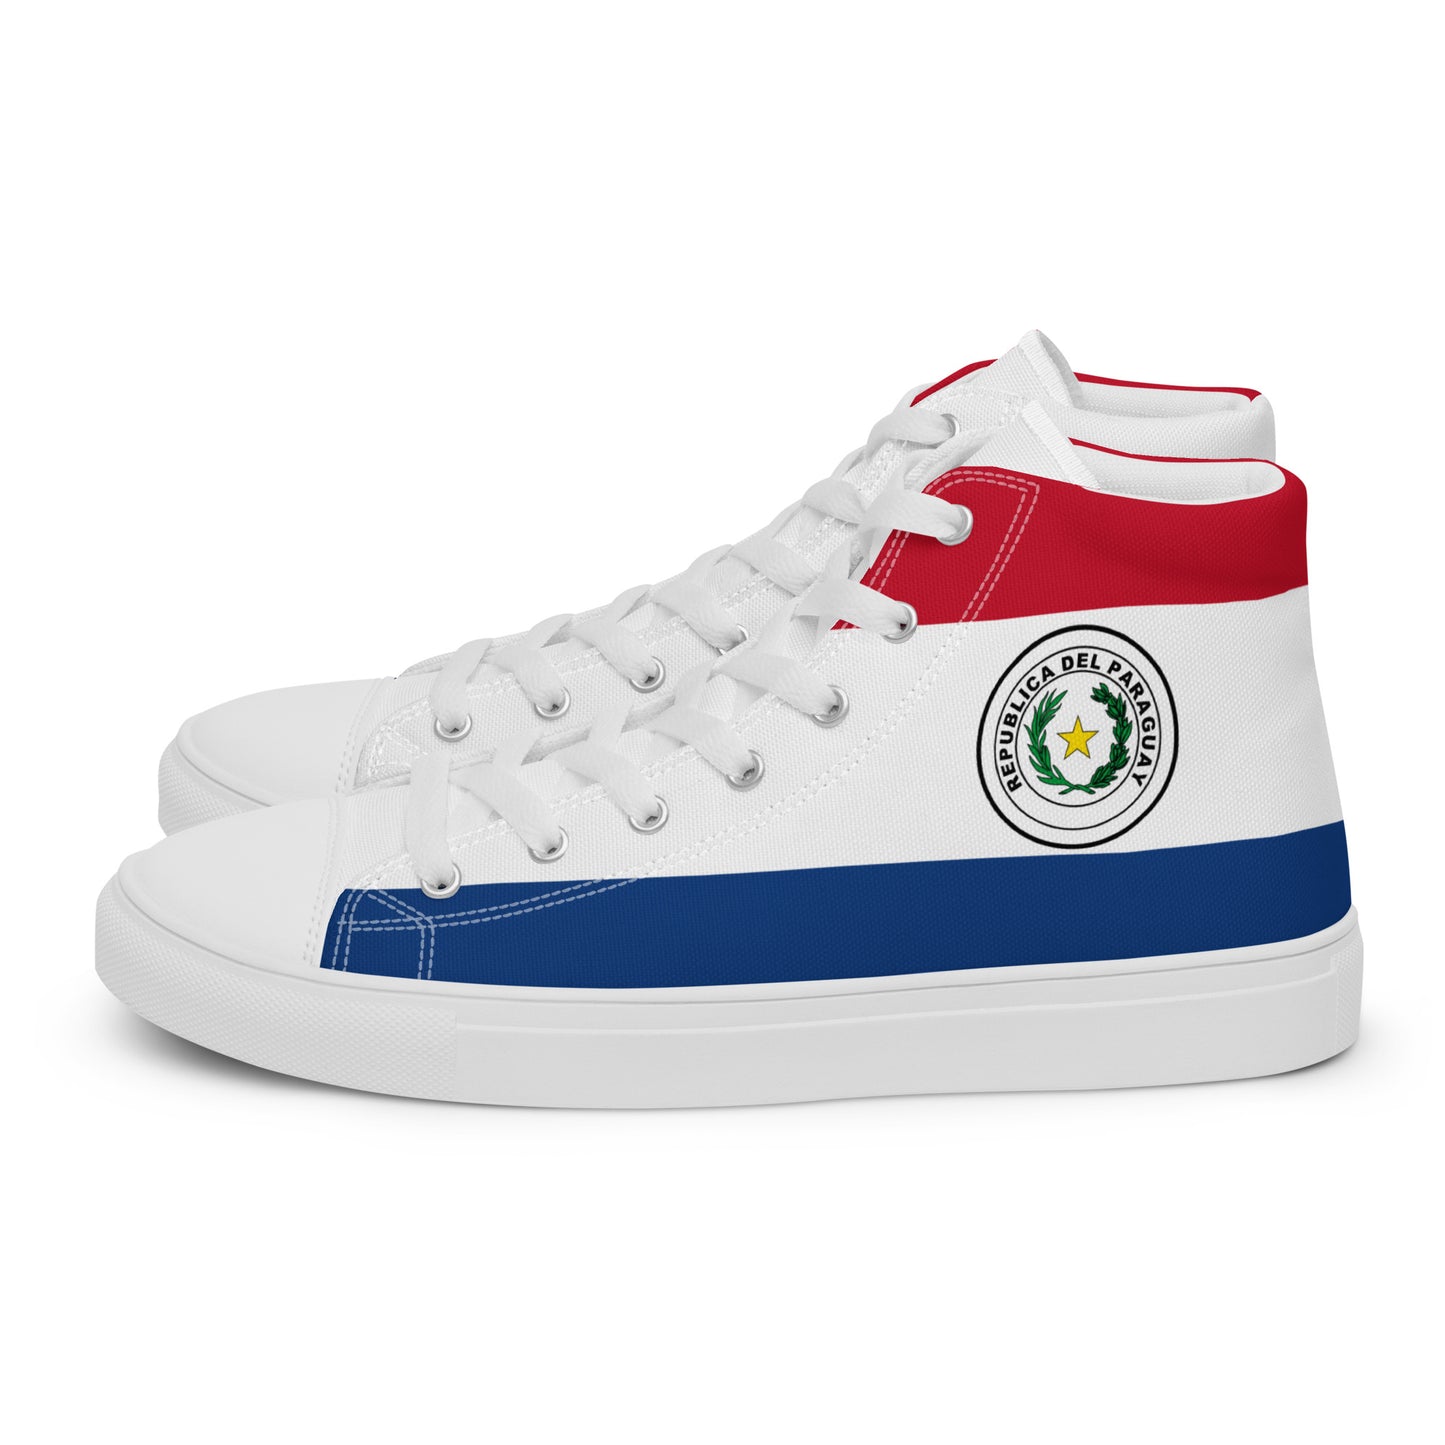 Paraguay - Hombre - Bandera - Zapatos High top